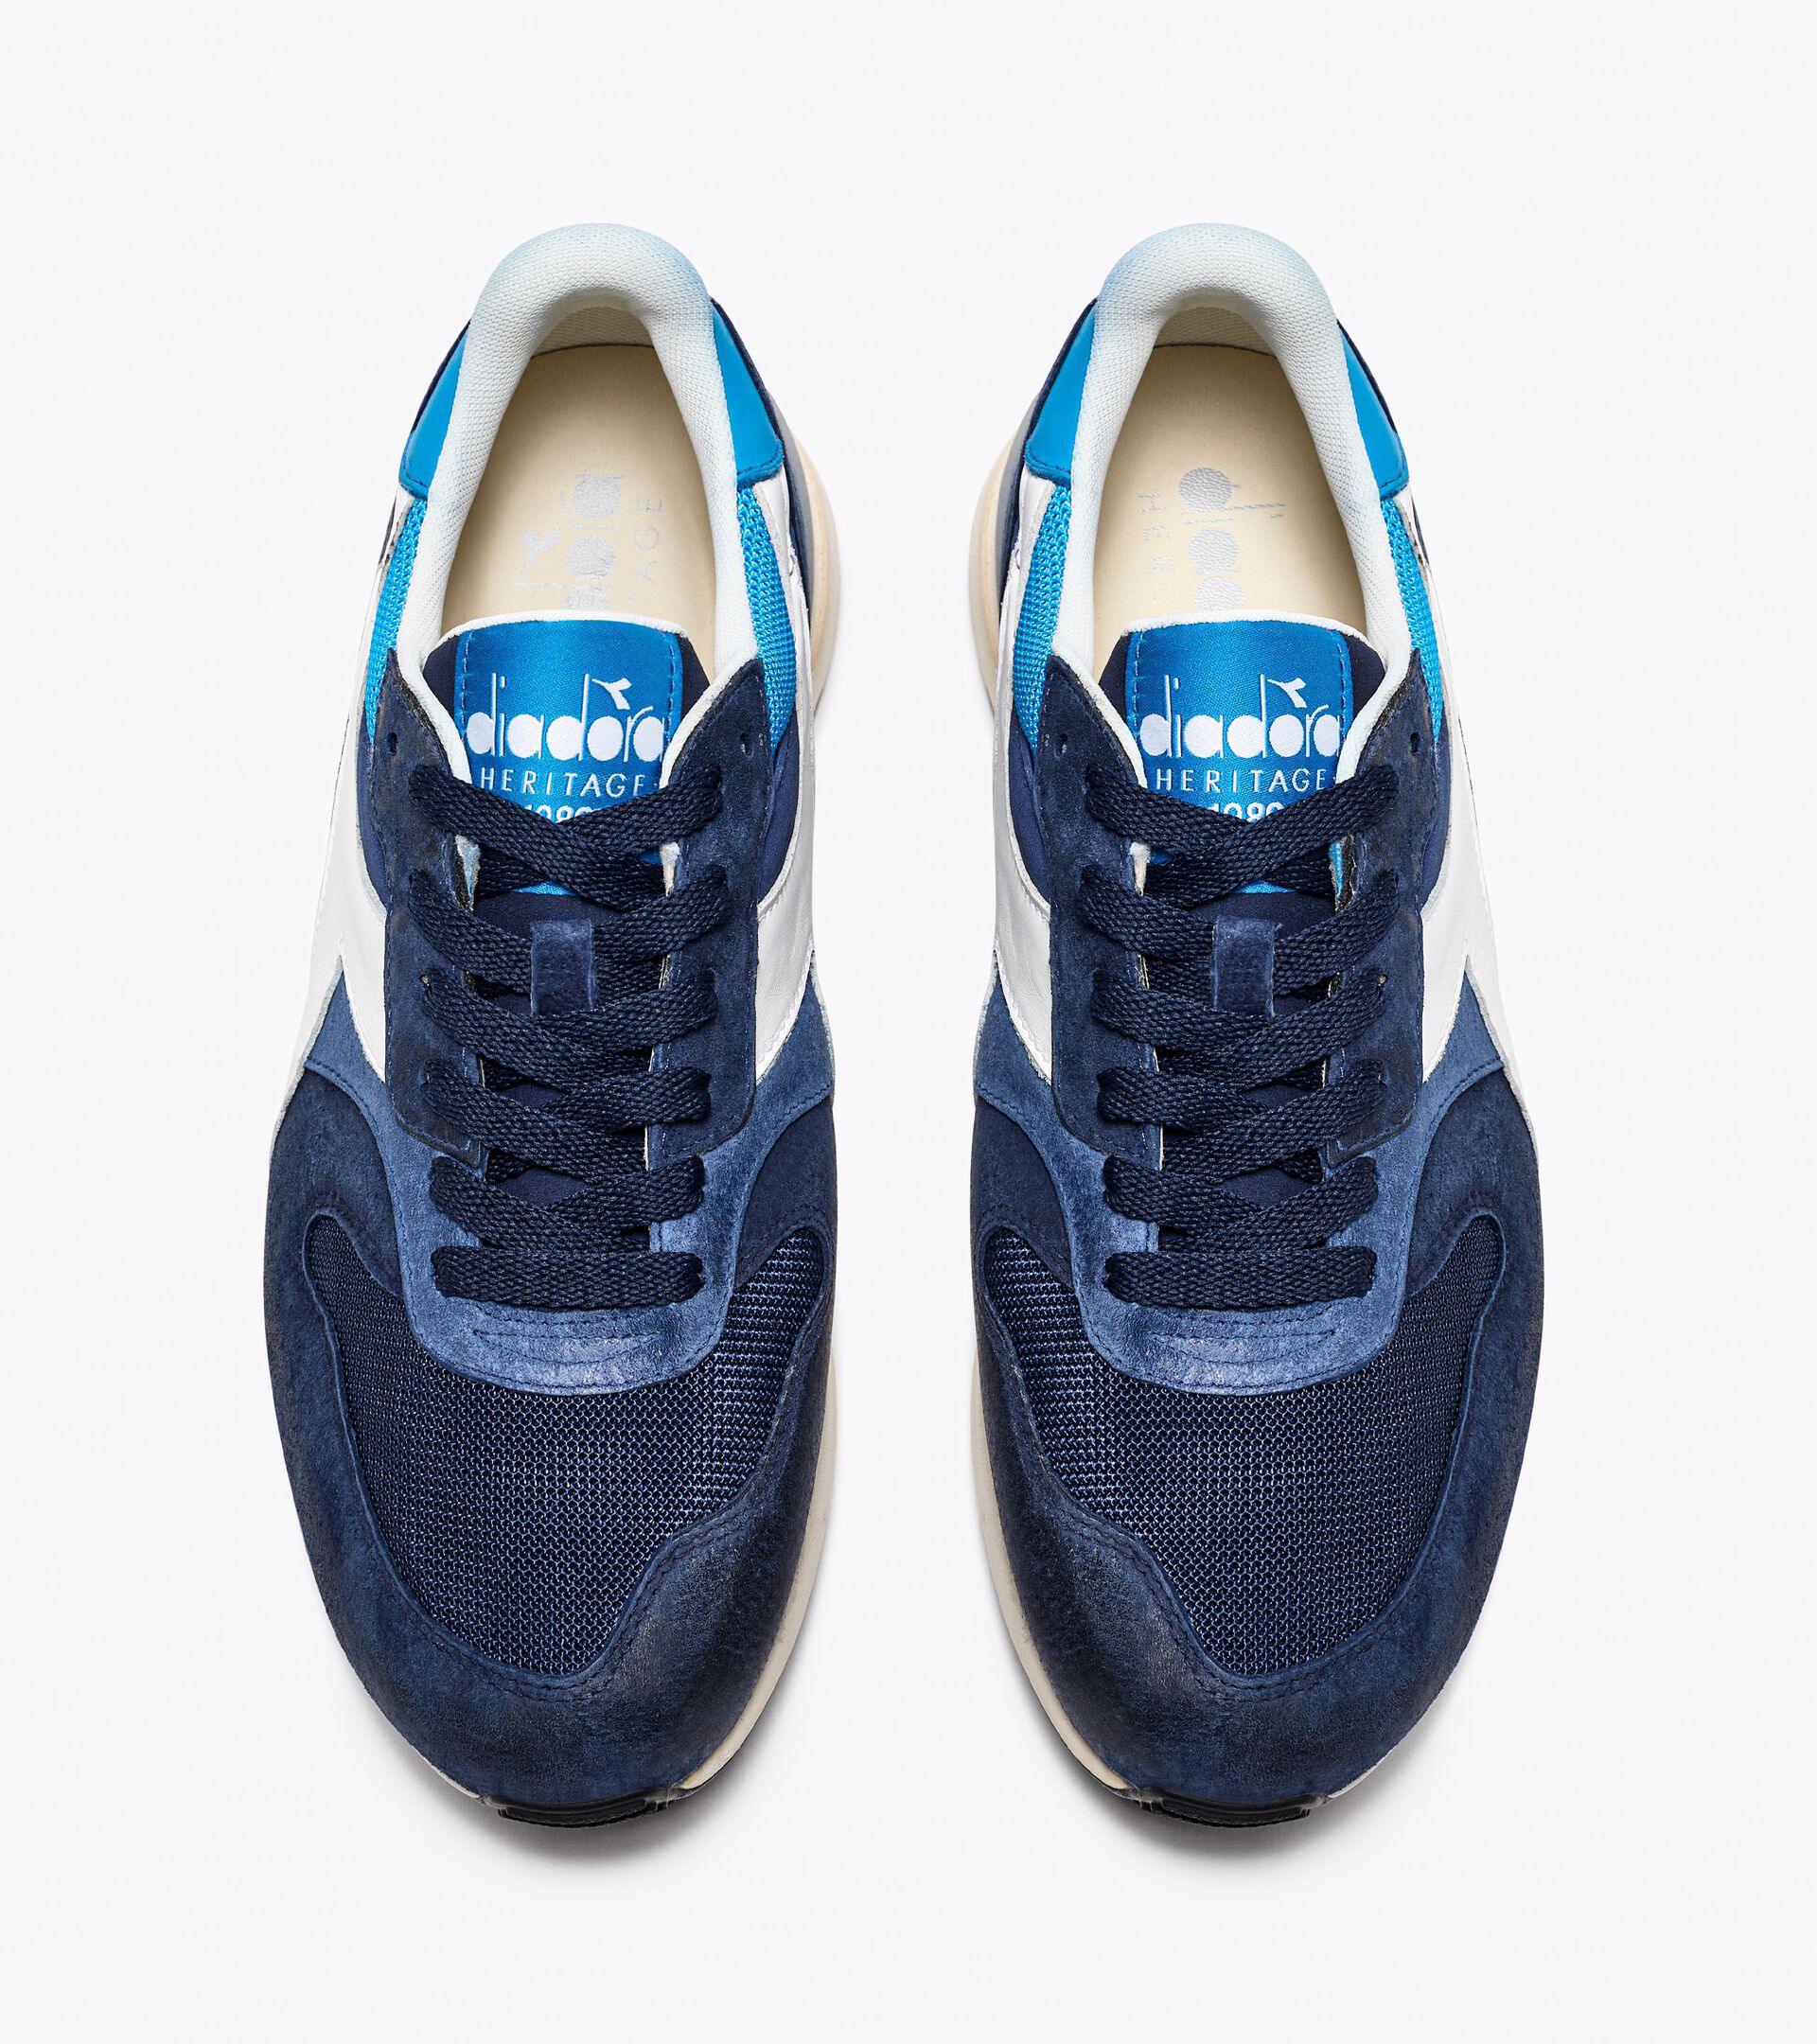 Heritage sneakers - Gender Neutral  CONQUEST PIGSKIN SW BLUE EBONY - Diadora